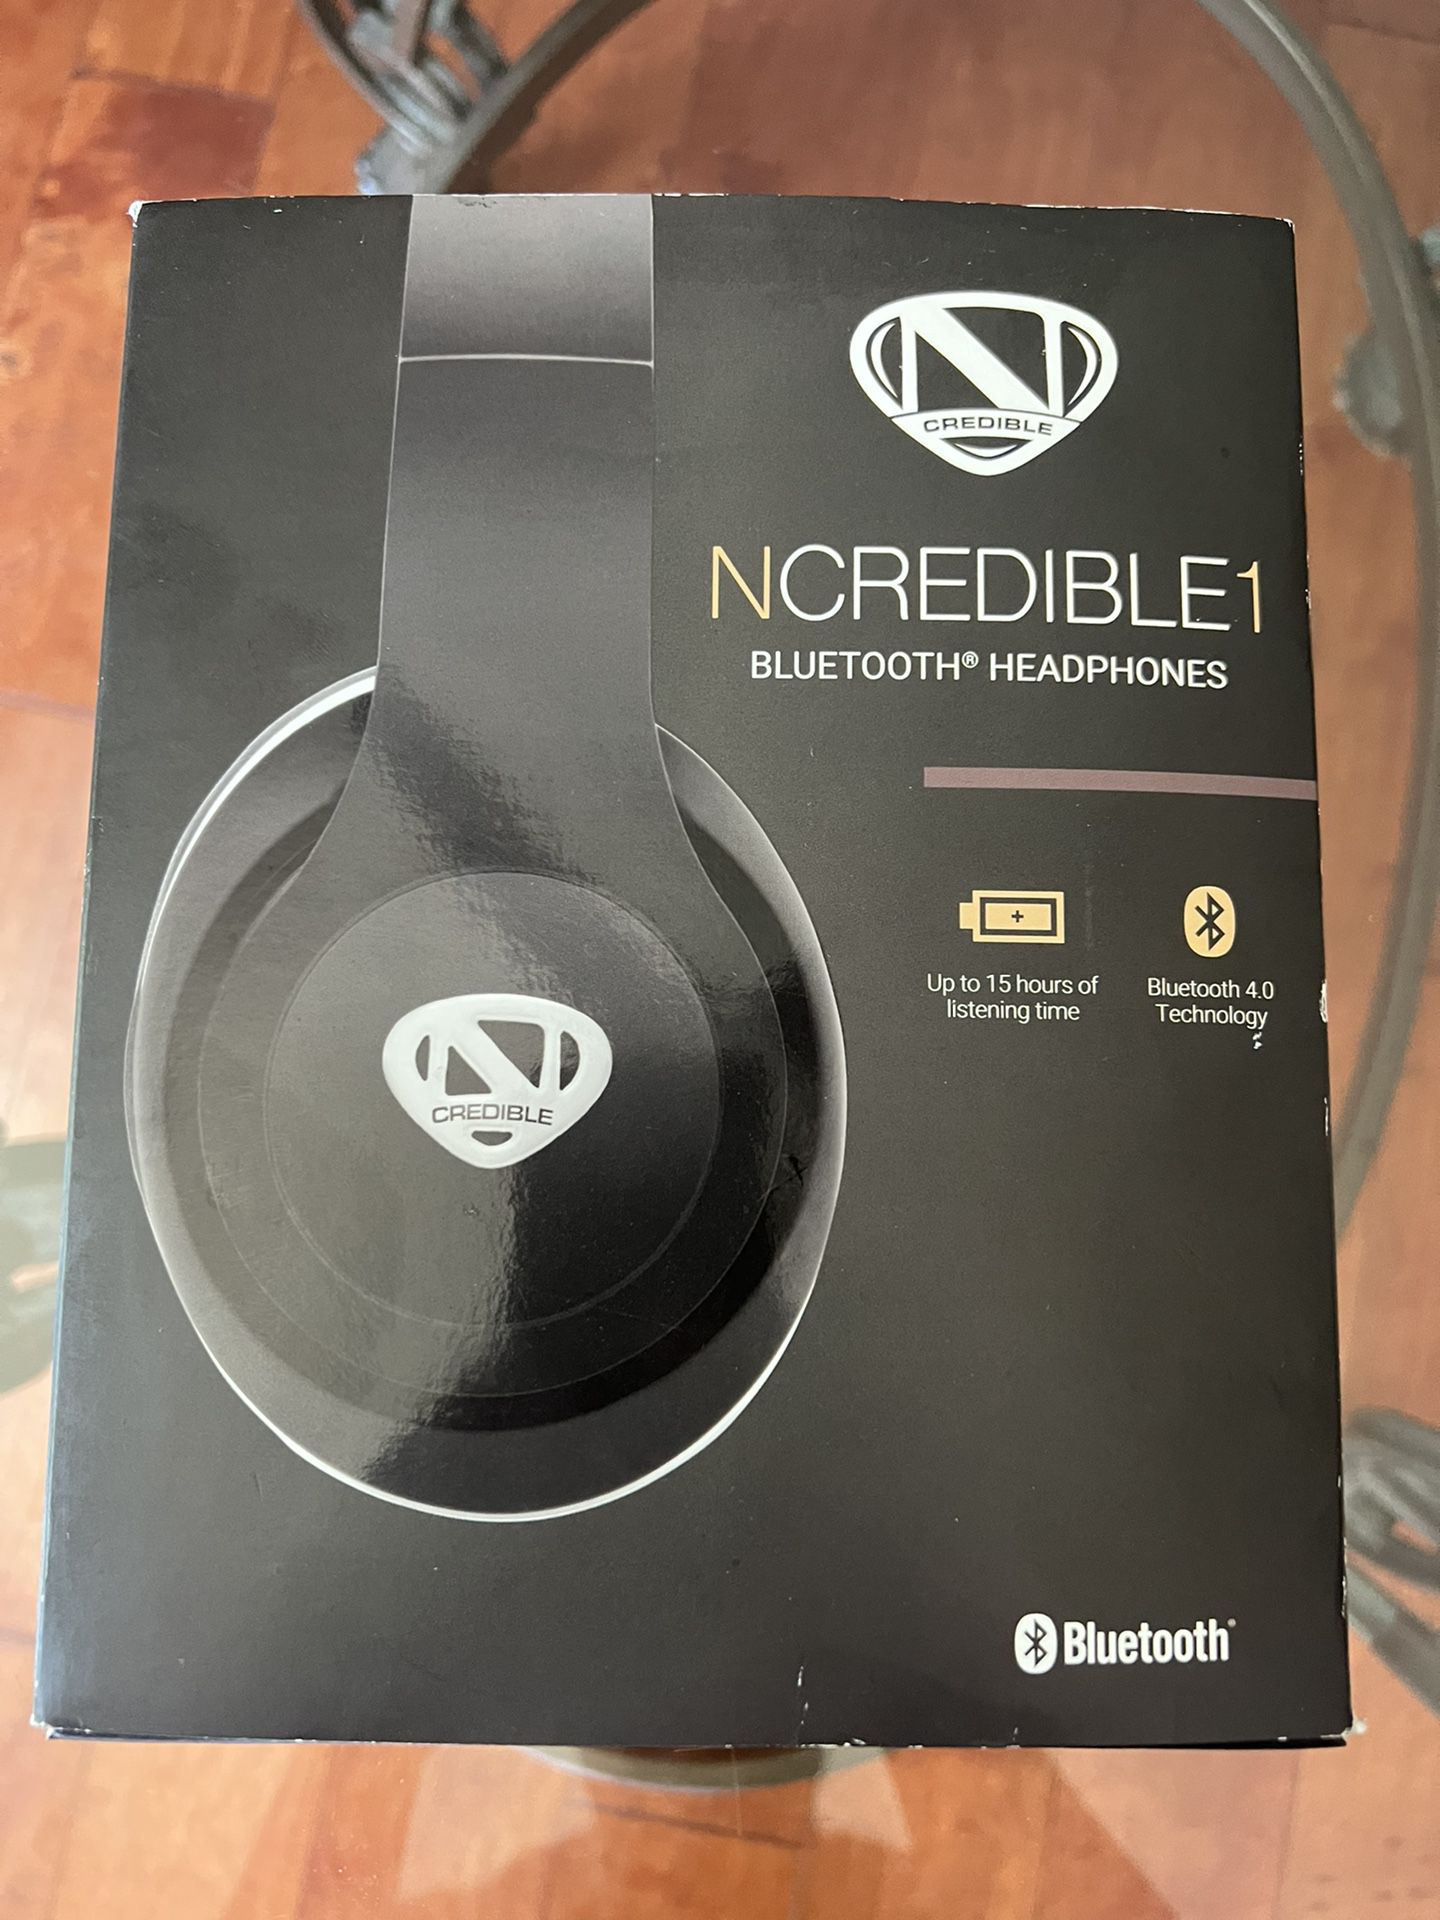 NVREDIBLE1 - Bluetooth Headsets